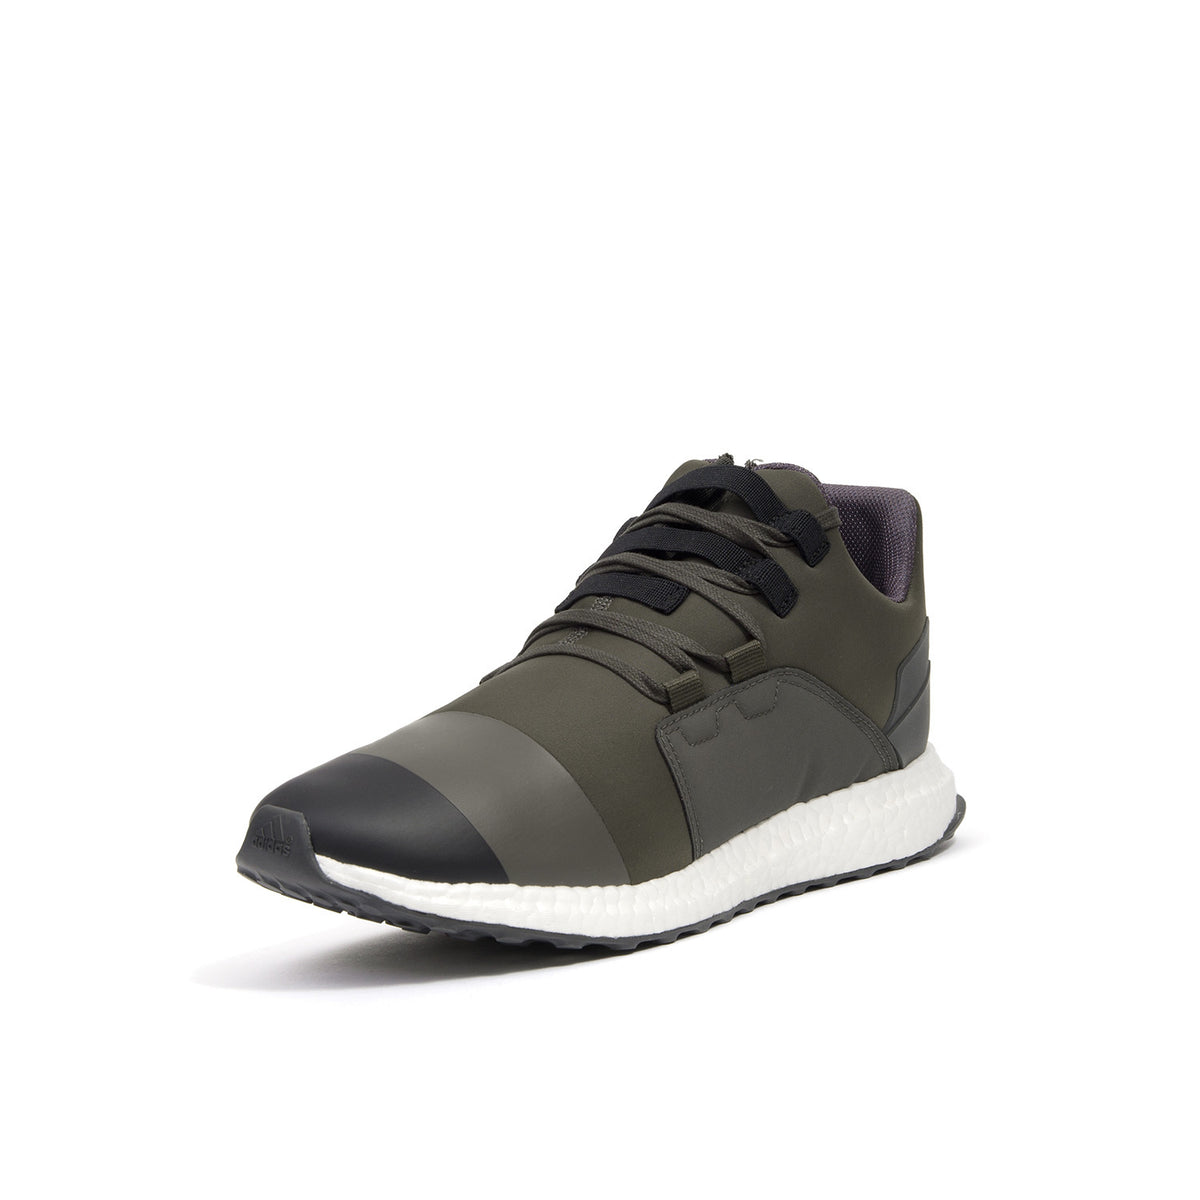 adidas Y-3 | Kozoko Low Black Olive/Black - CG3161 - Concrete